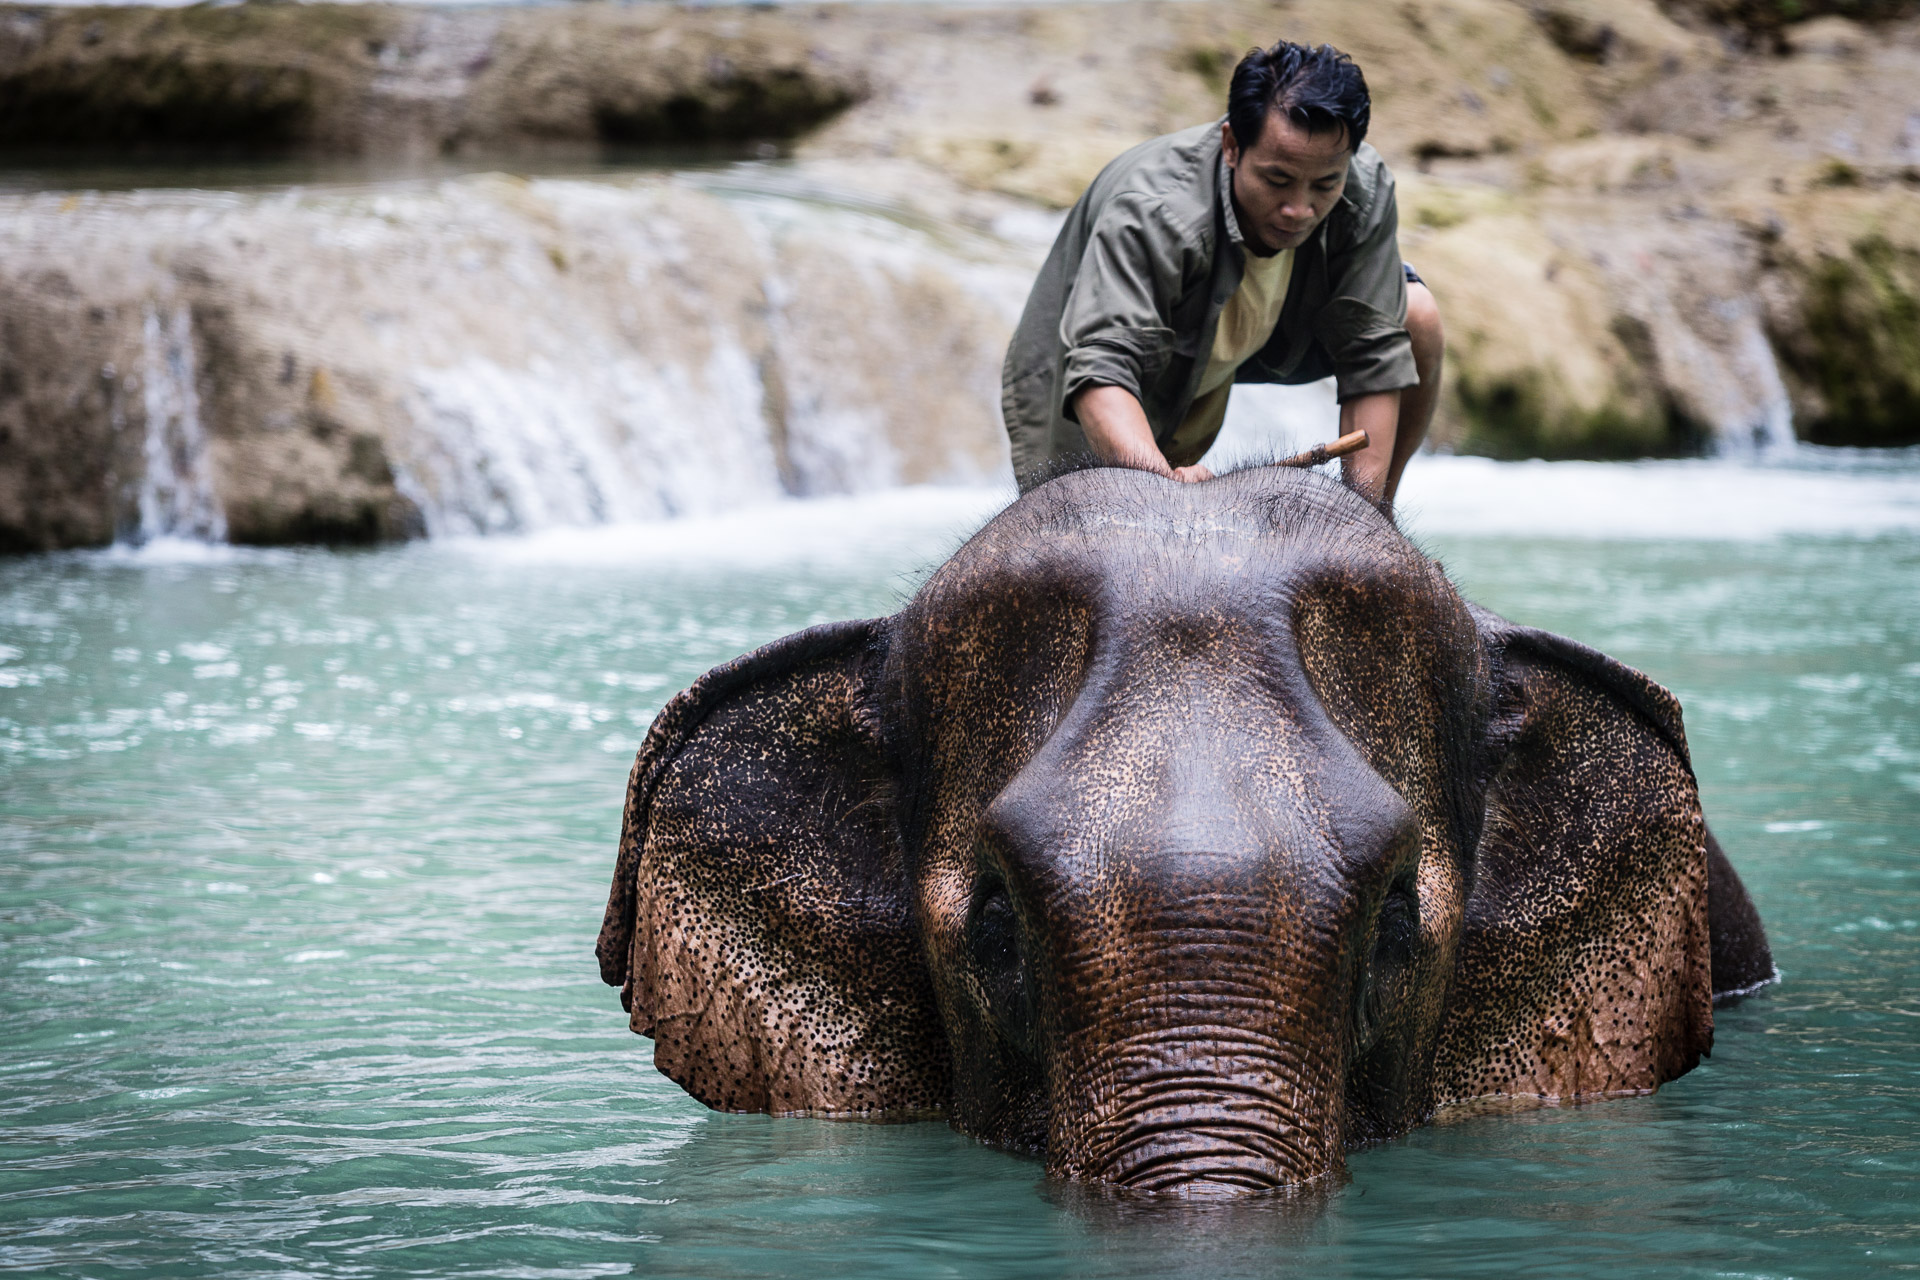 Elephant Laos